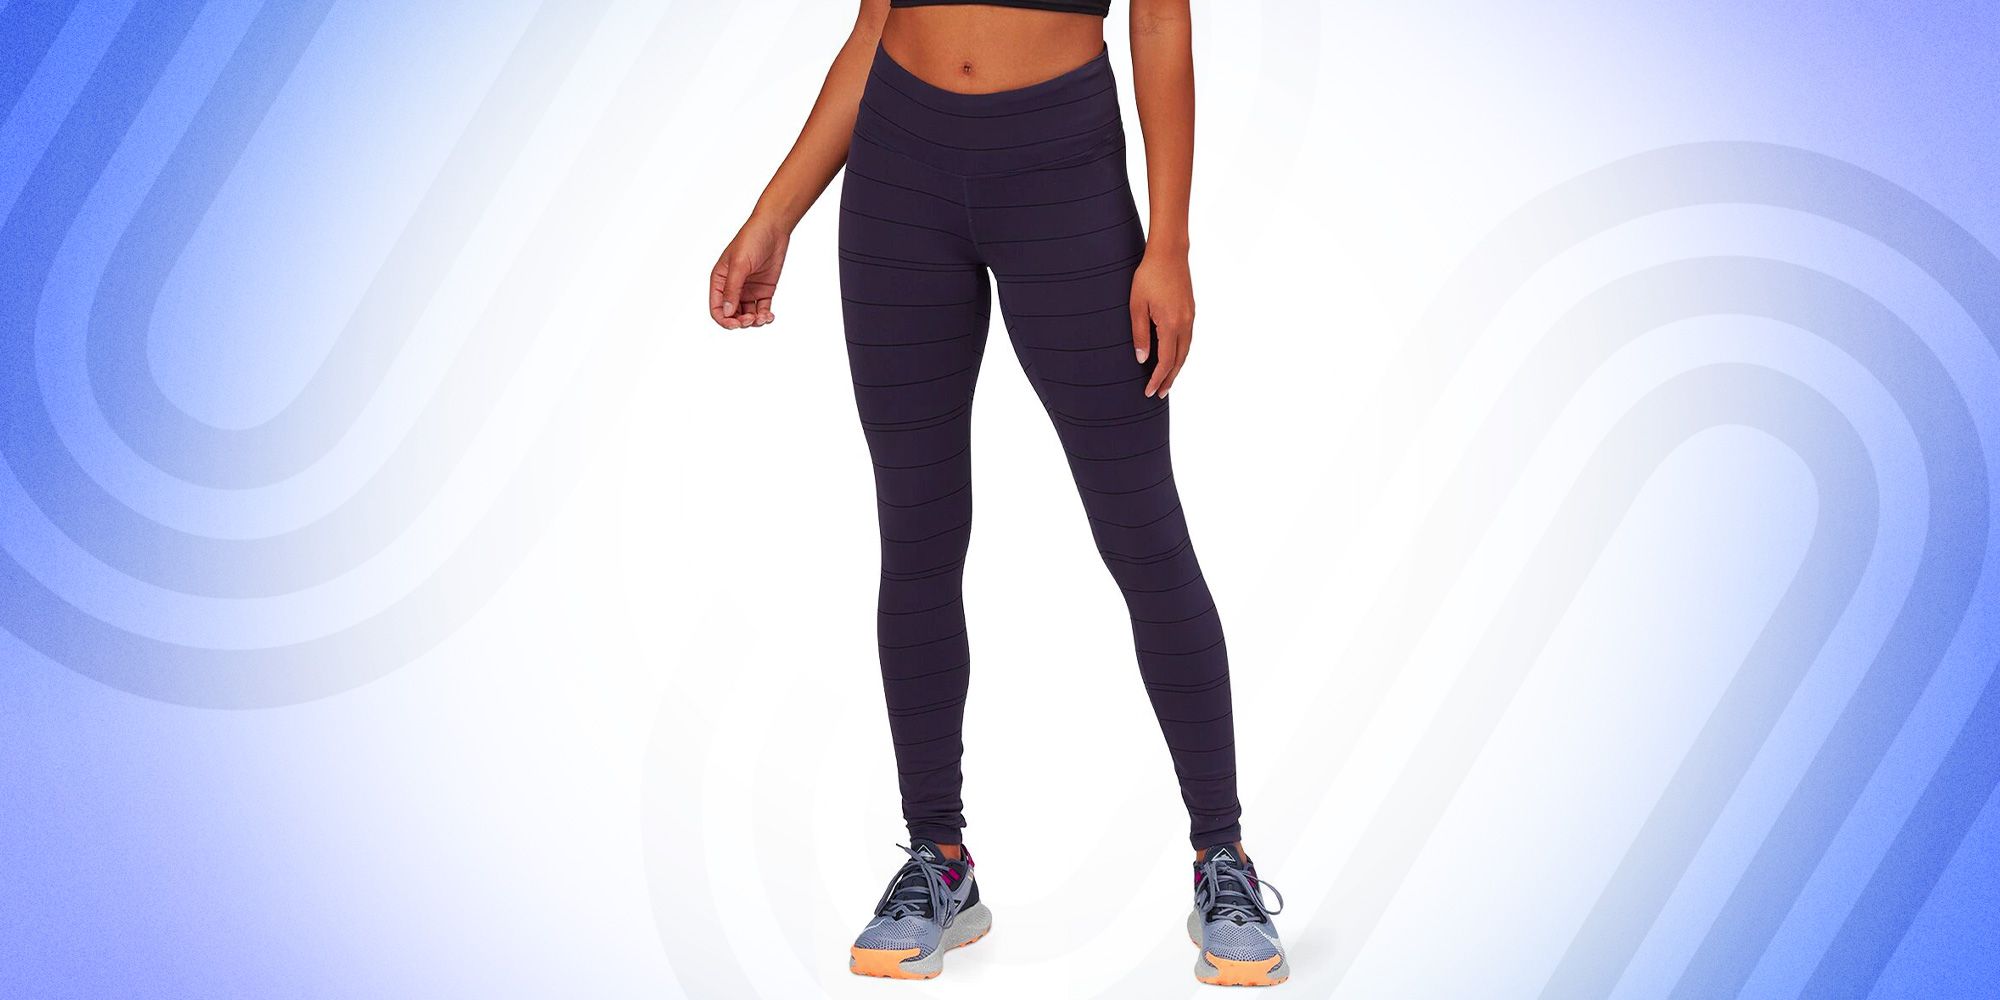 USA Pro Leggings Ladies Pants Trousers Bottoms High Waist Sweat Wicking Workout 